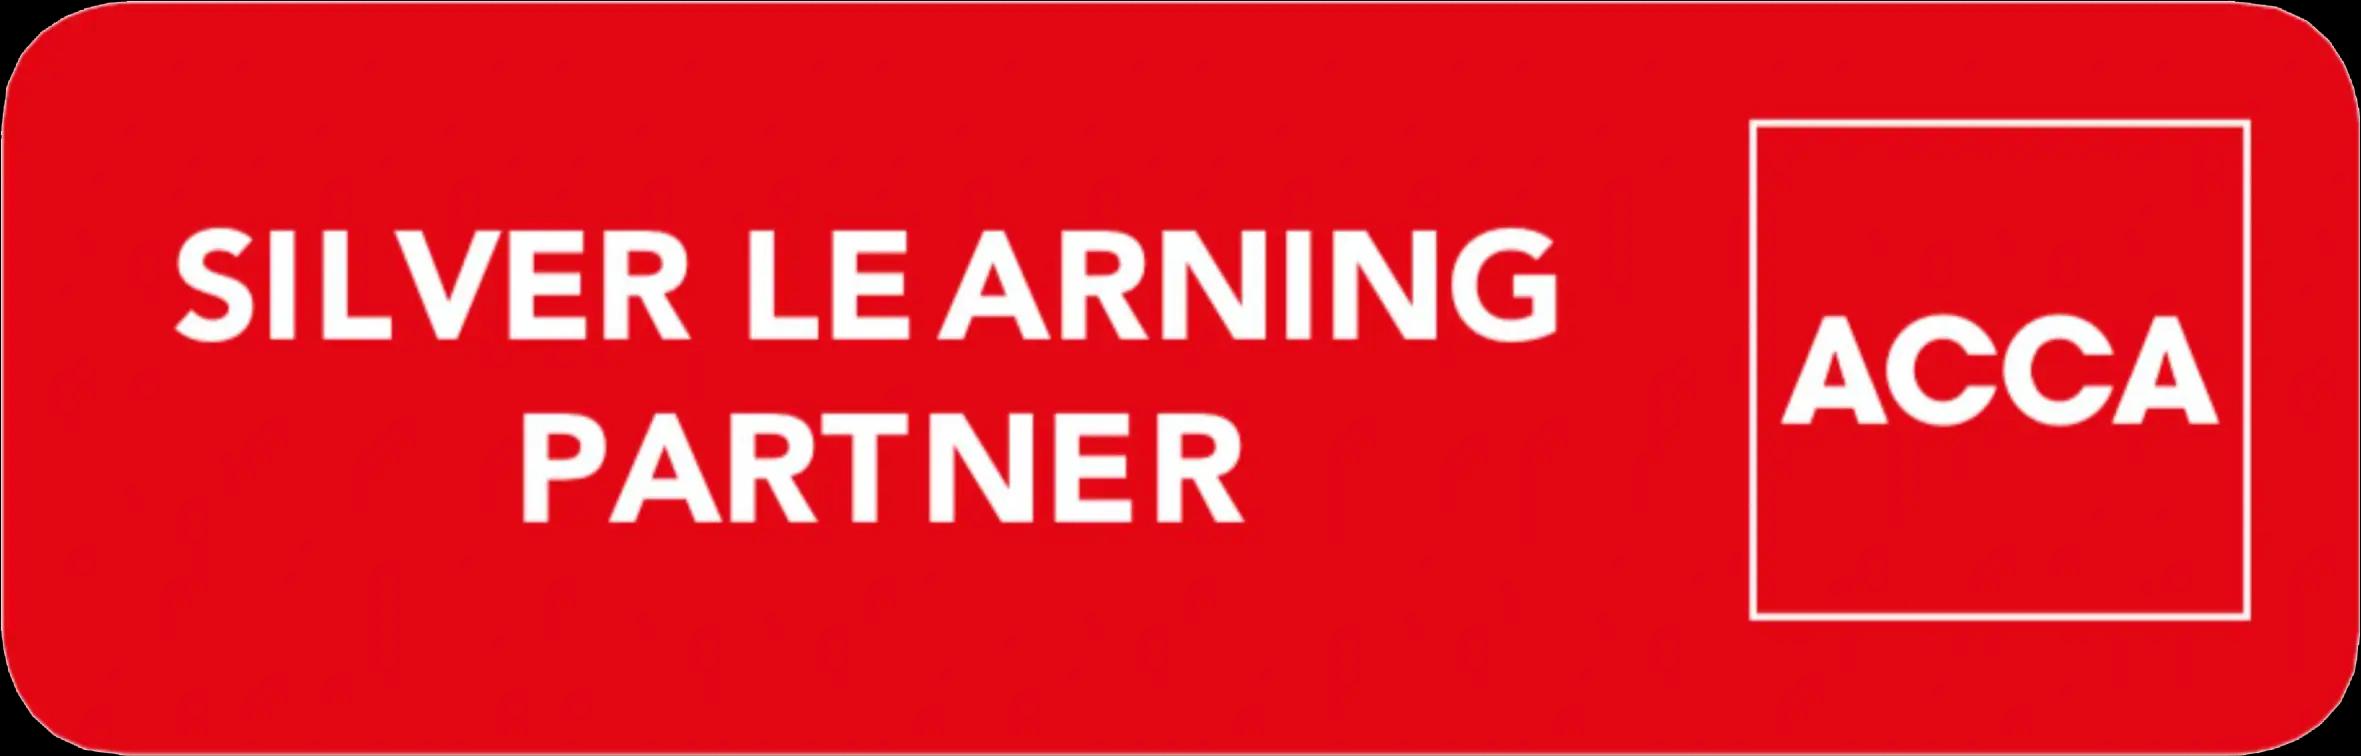 ACCA Silver Partner Banner